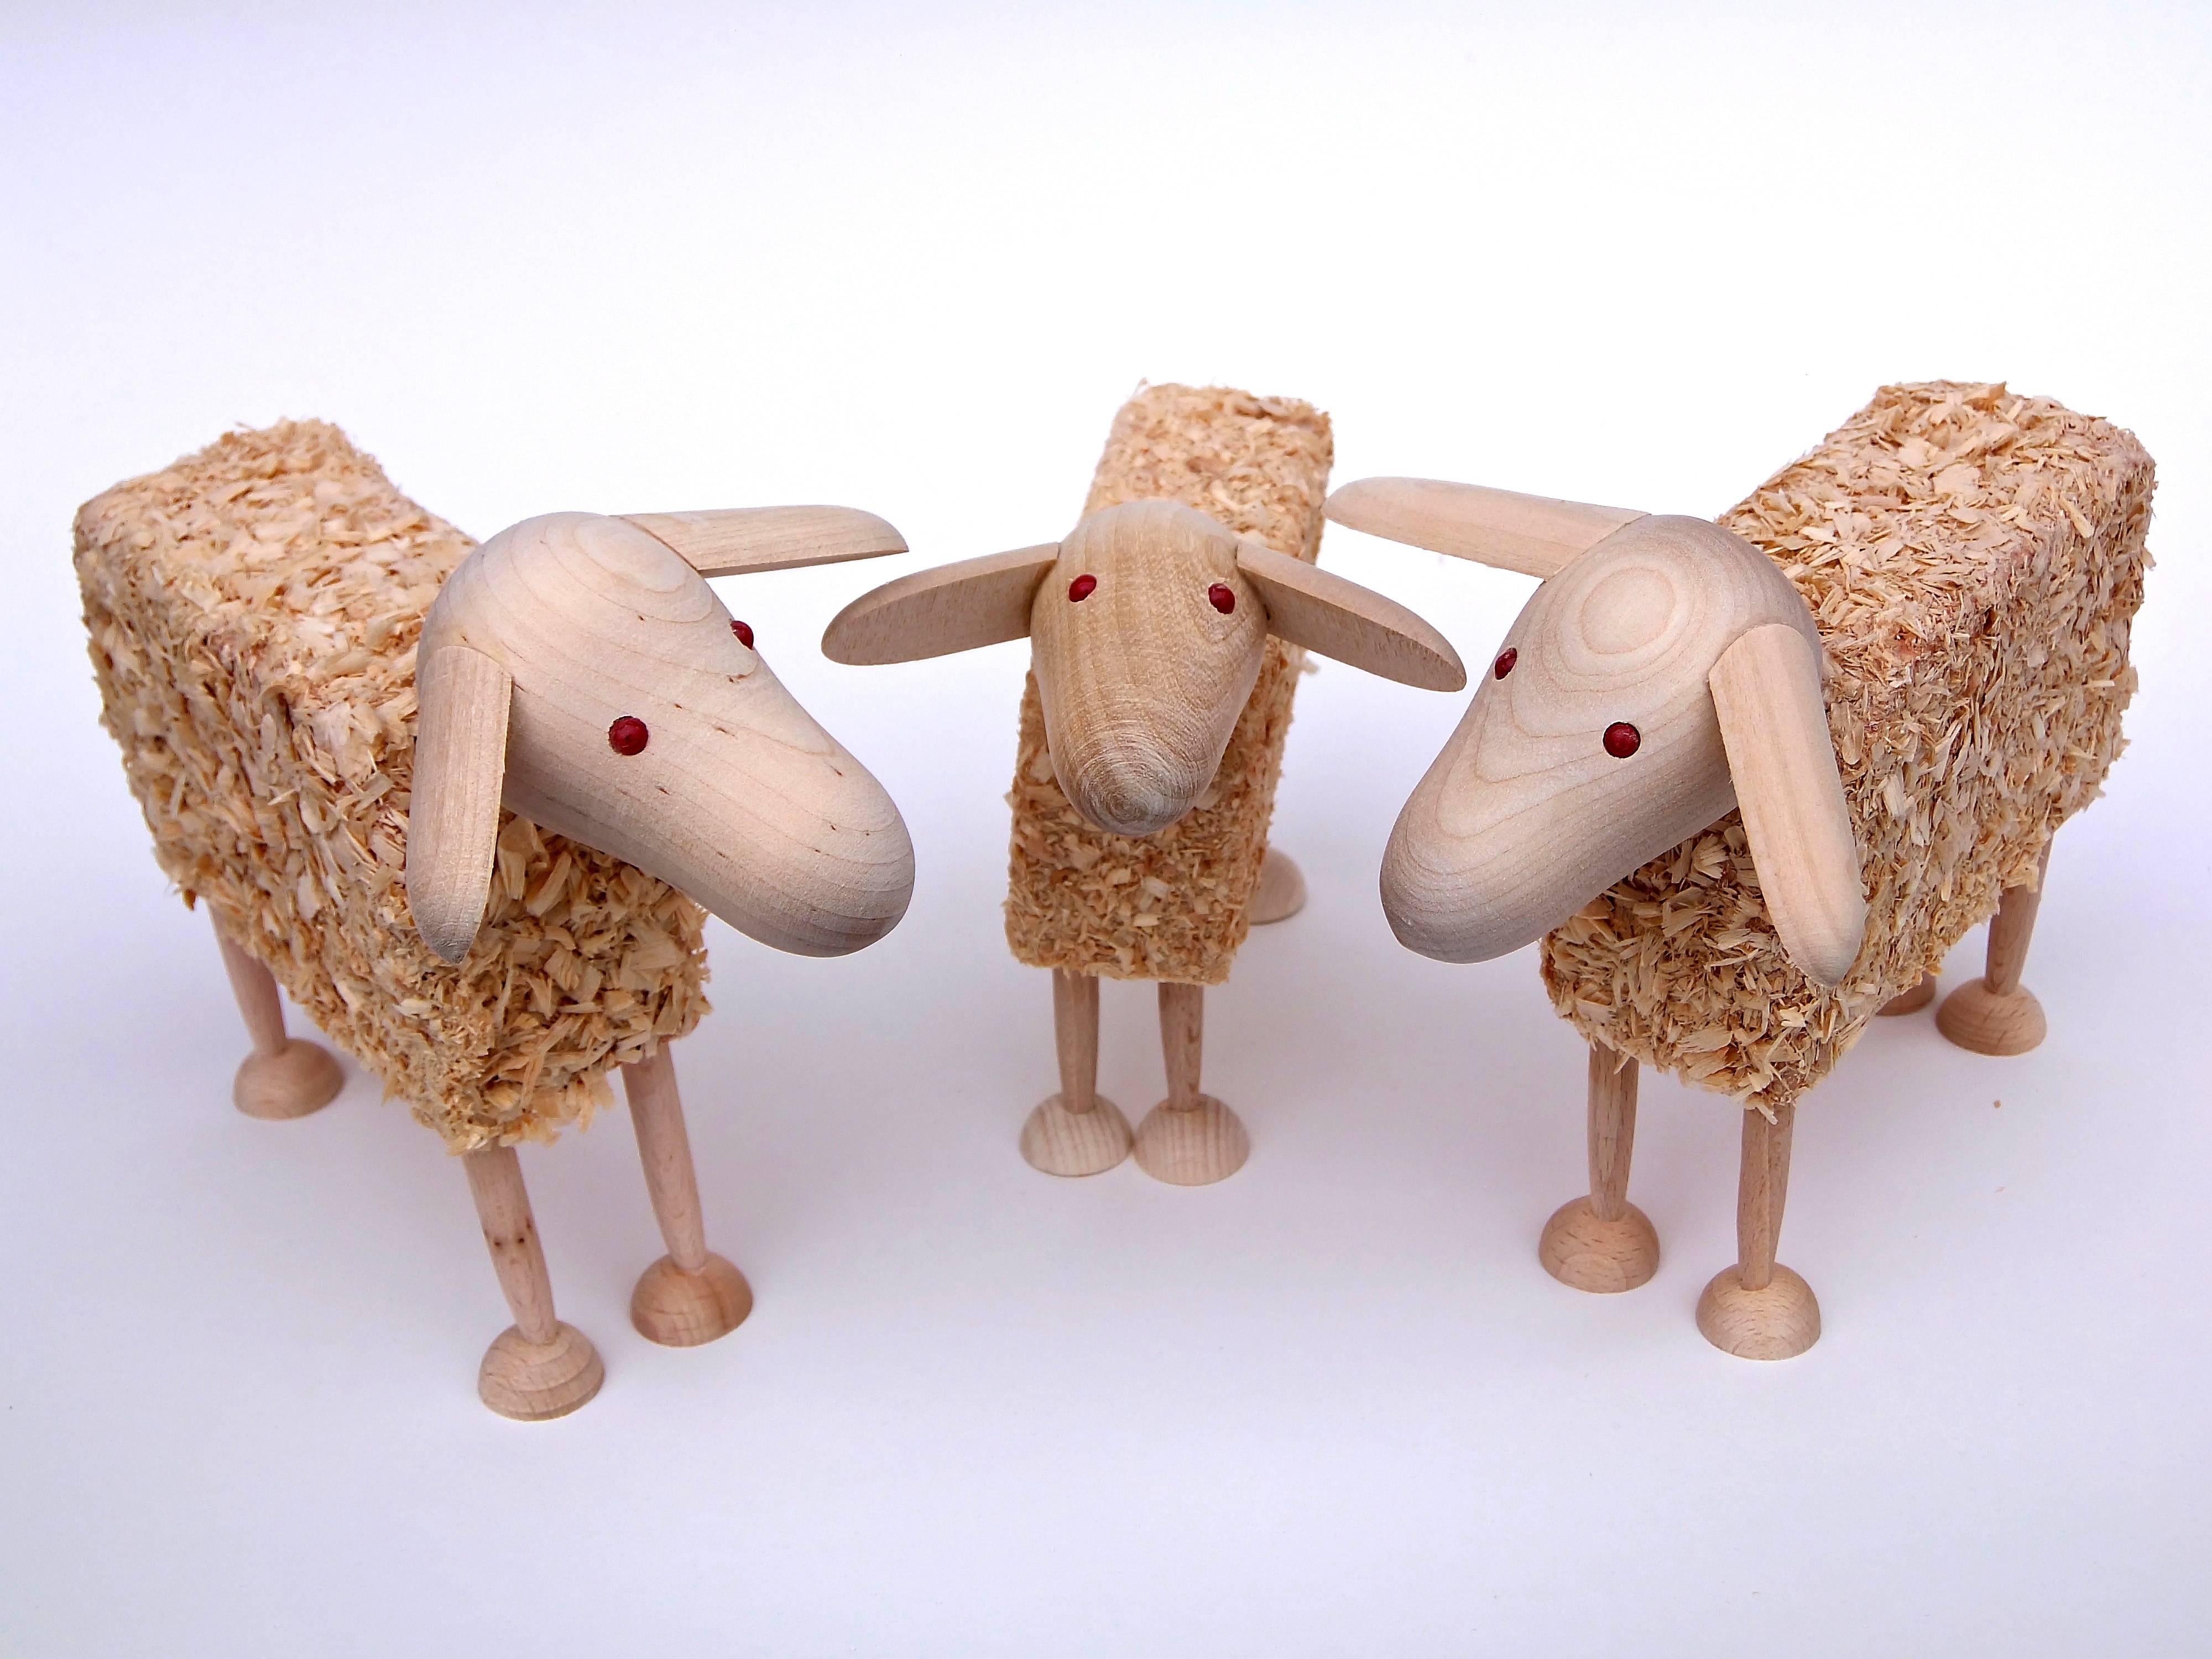 3 brown wooden sheep figurines